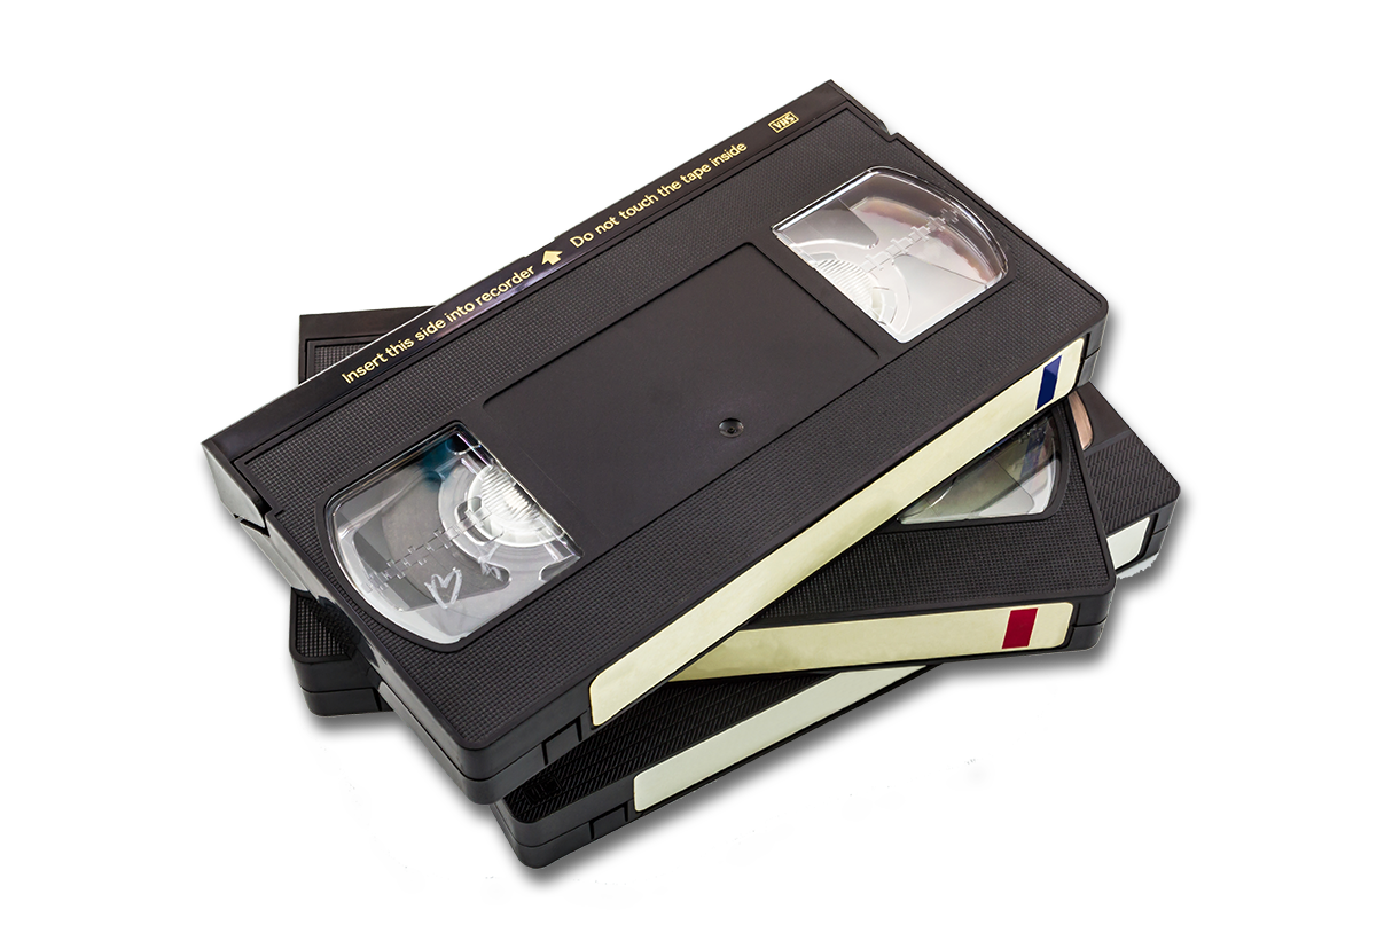 VHS Tapes for transfer to digital media